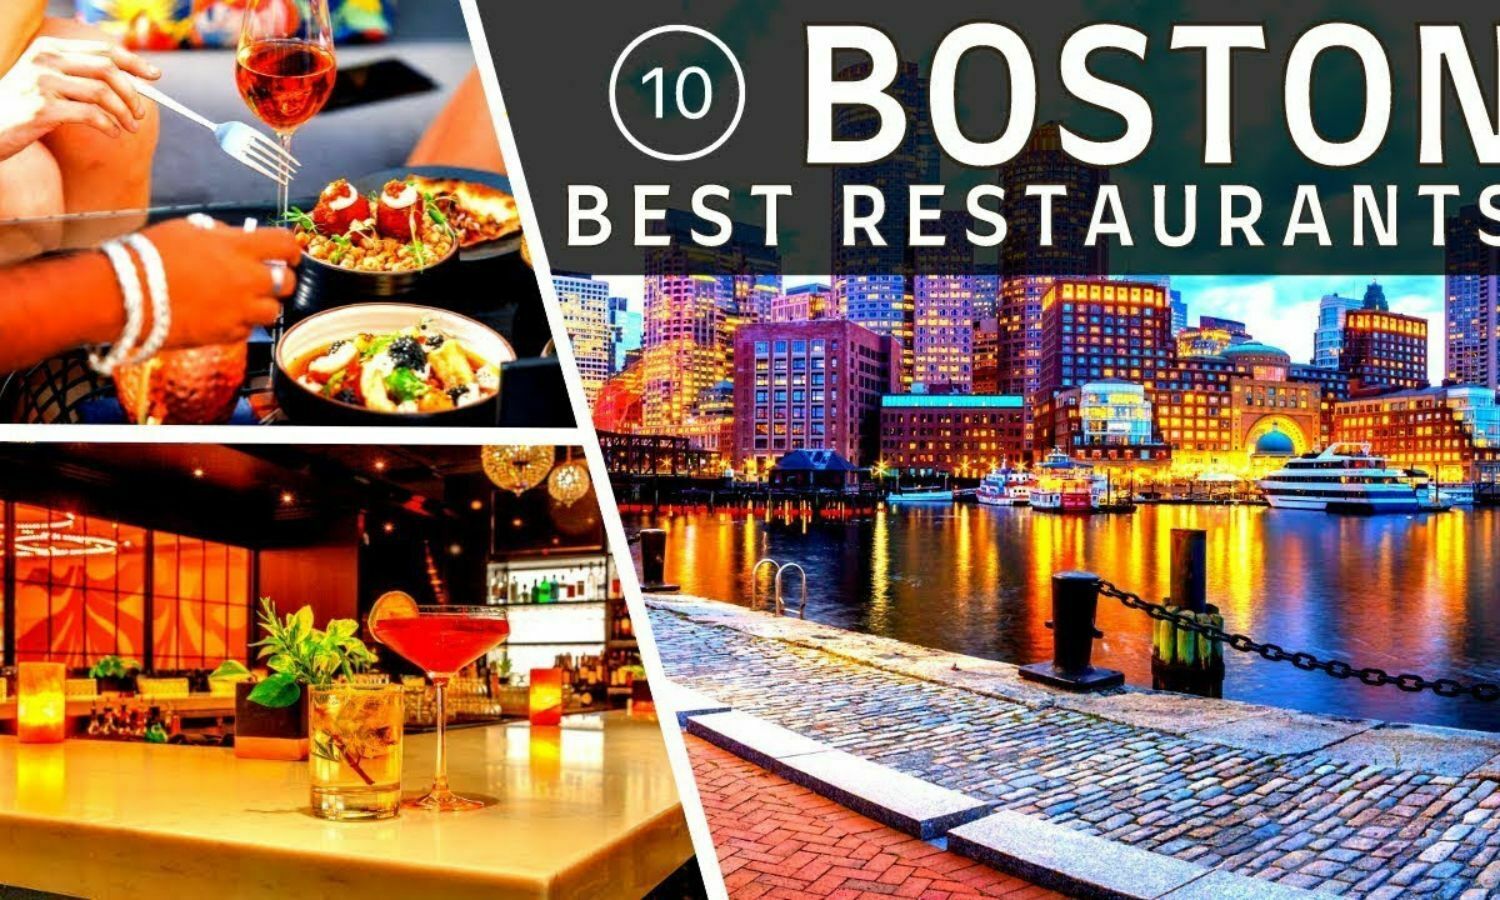 The 10 Best Restaurants in Boston